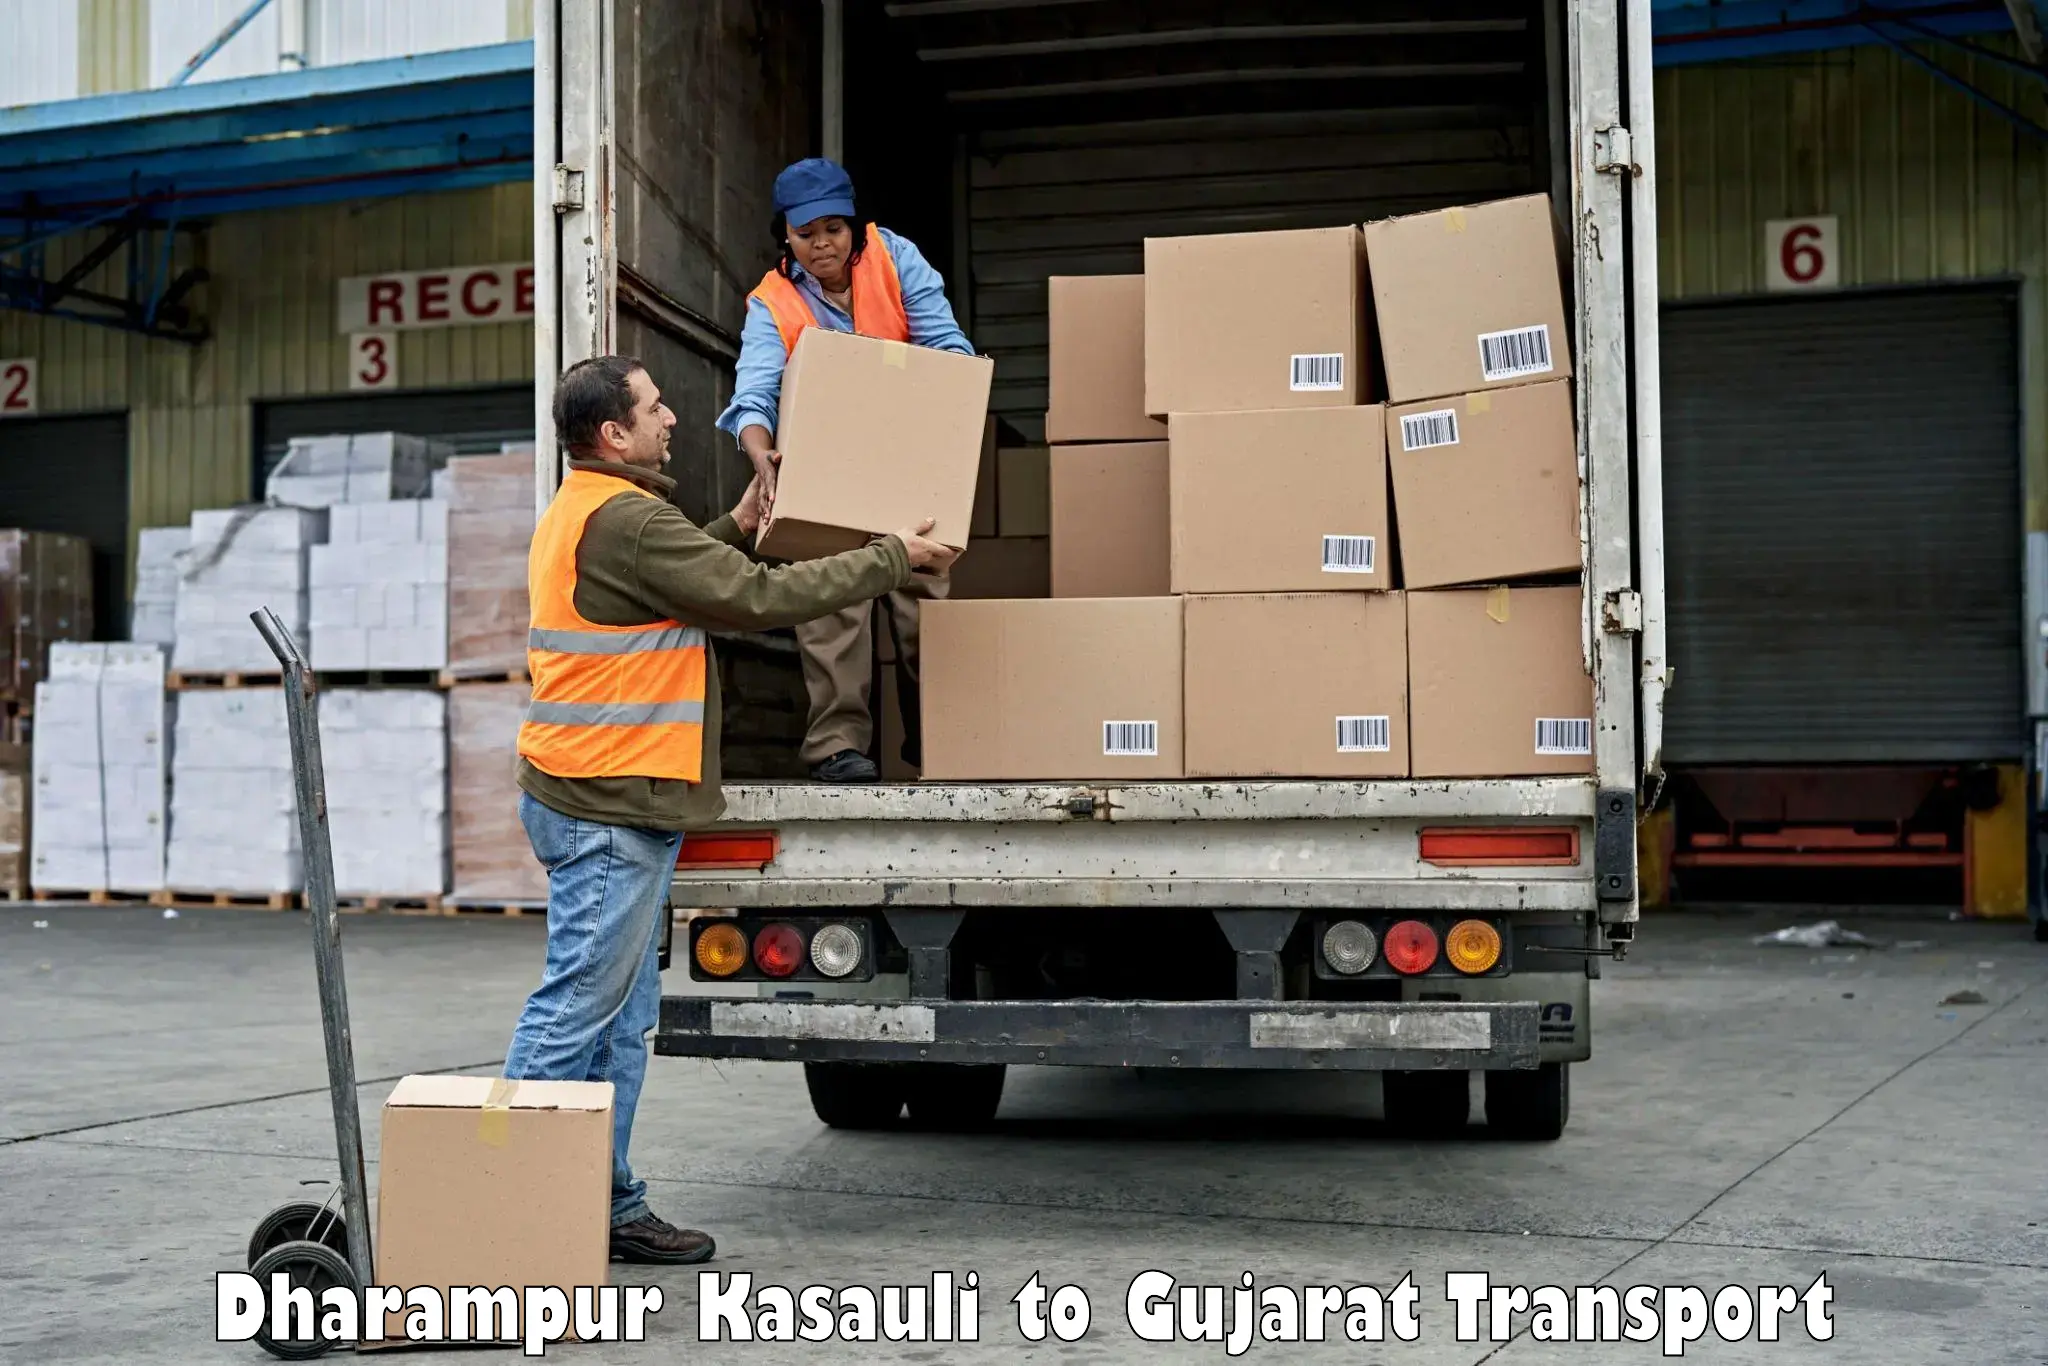 Pick up transport service Dharampur Kasauli to Harij